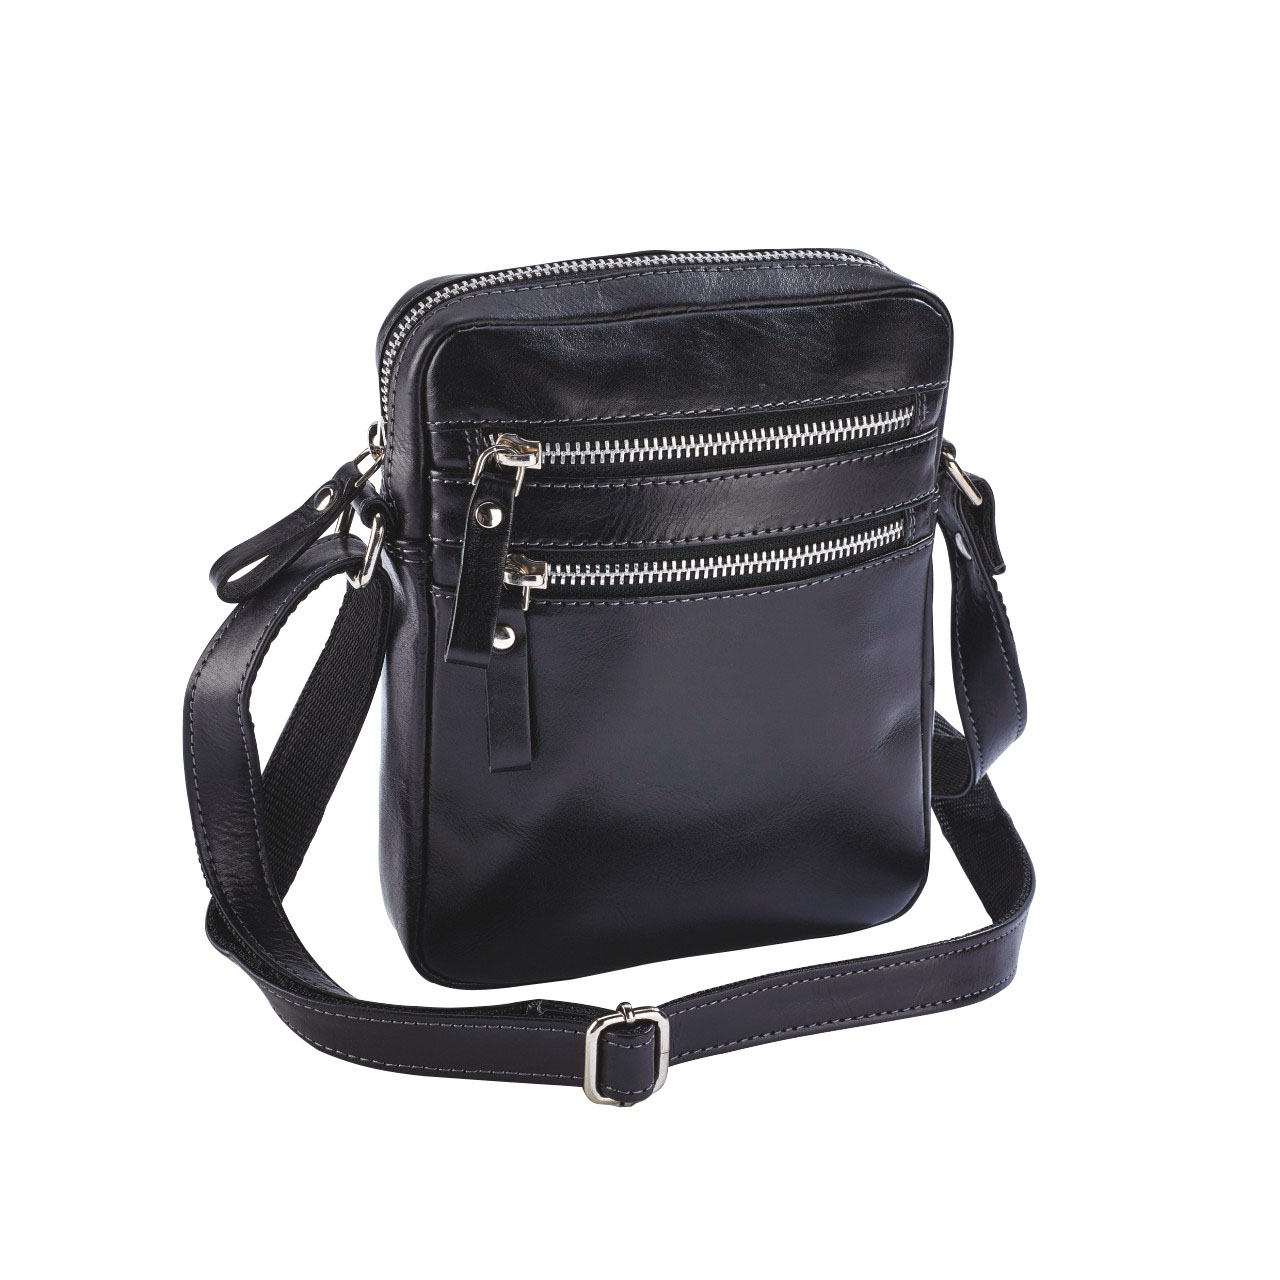 Slimline Leather Cross Body Travel Bag